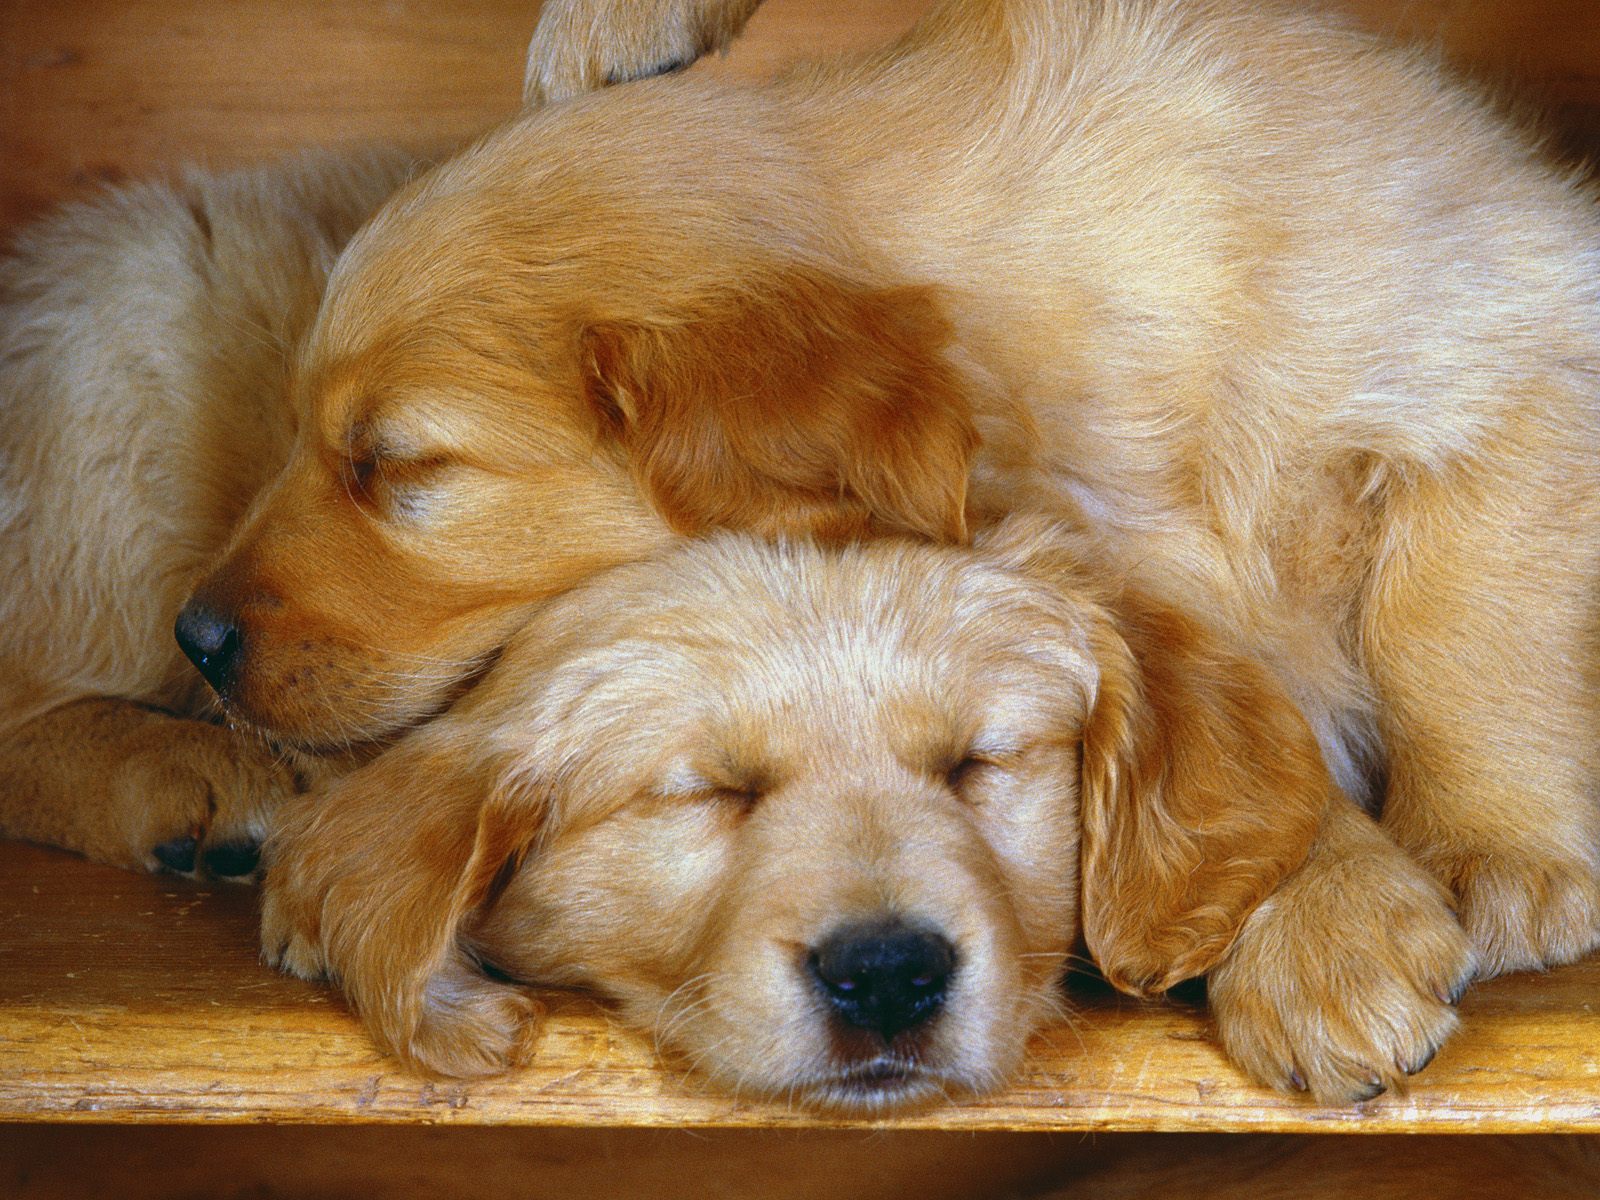 Sleepy+Puppys+Cute+Dogs+Background.jpg